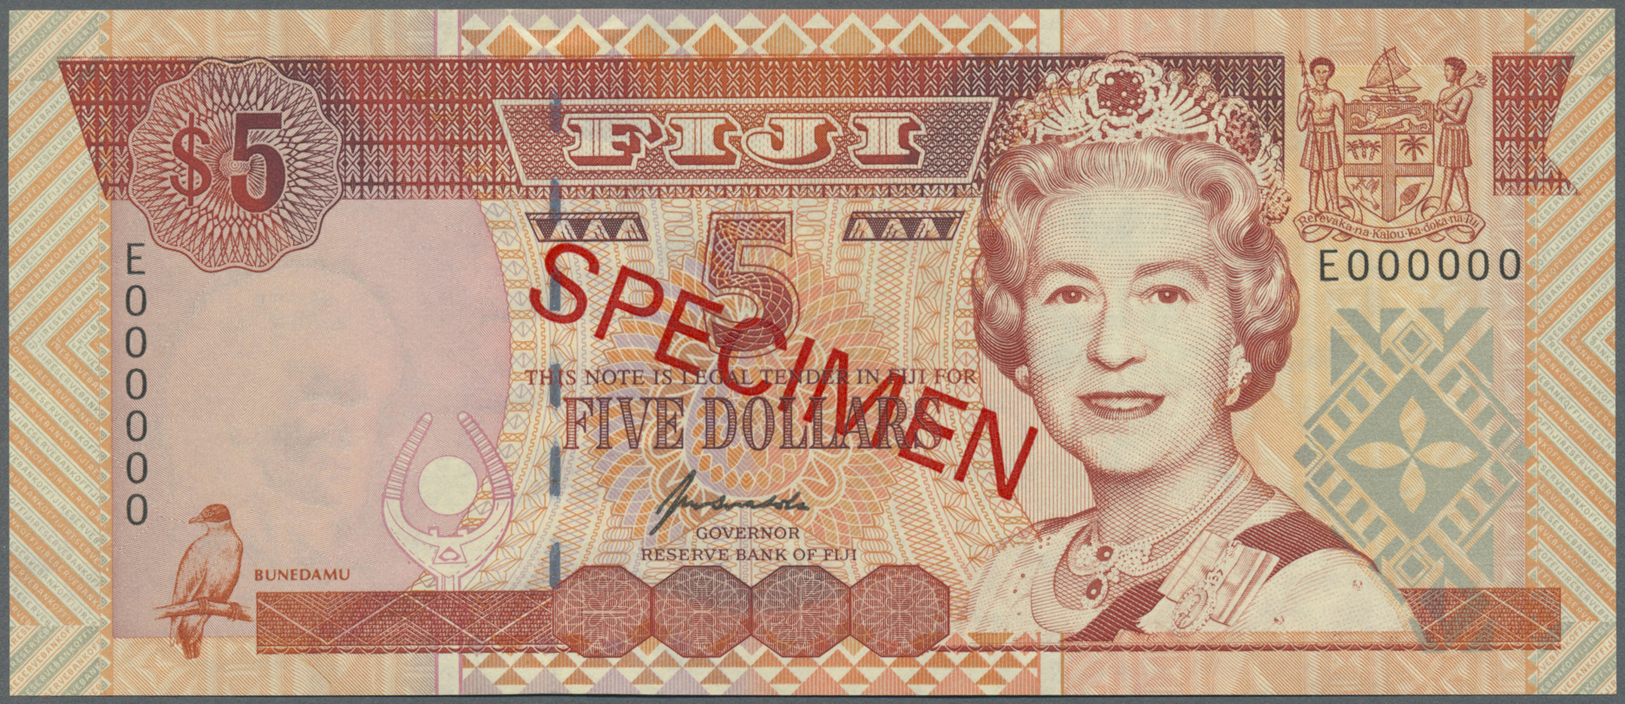 00787 Fiji: 5 Dollars 1995 Specimen P. 97s In Condition: UNC. - Fiji